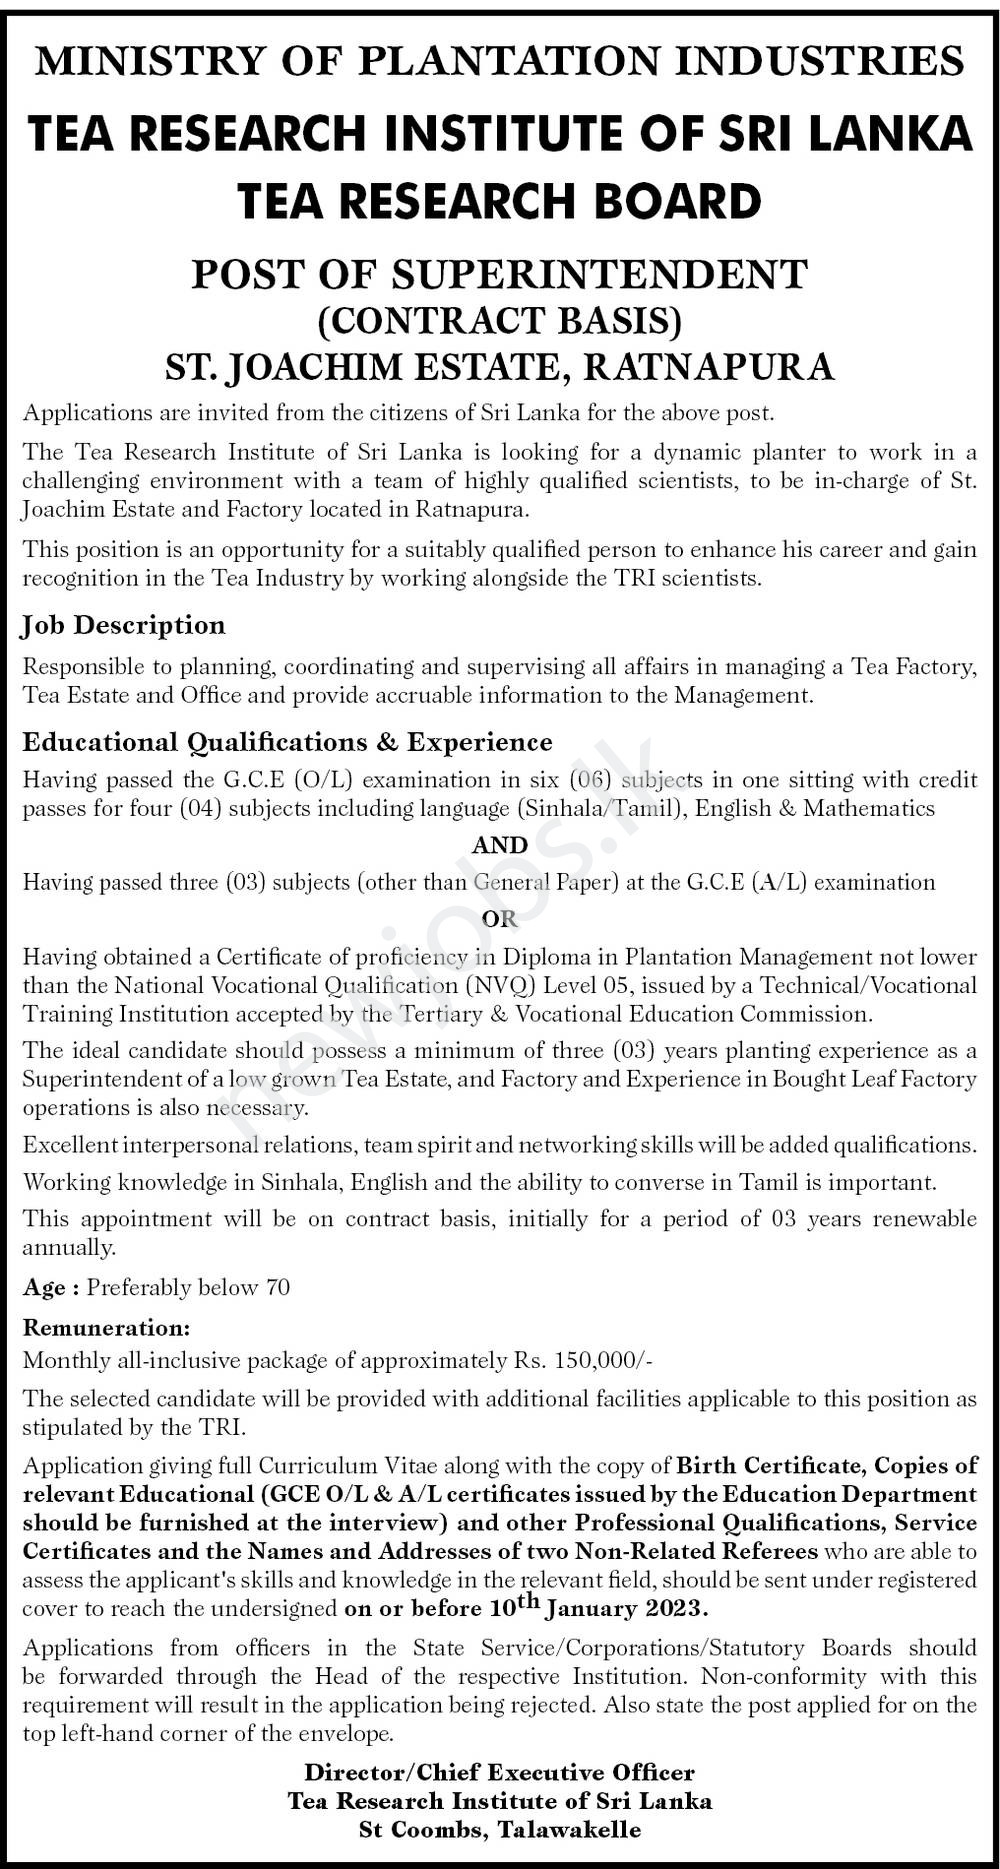 Ministry of Industries Job Vacancies 